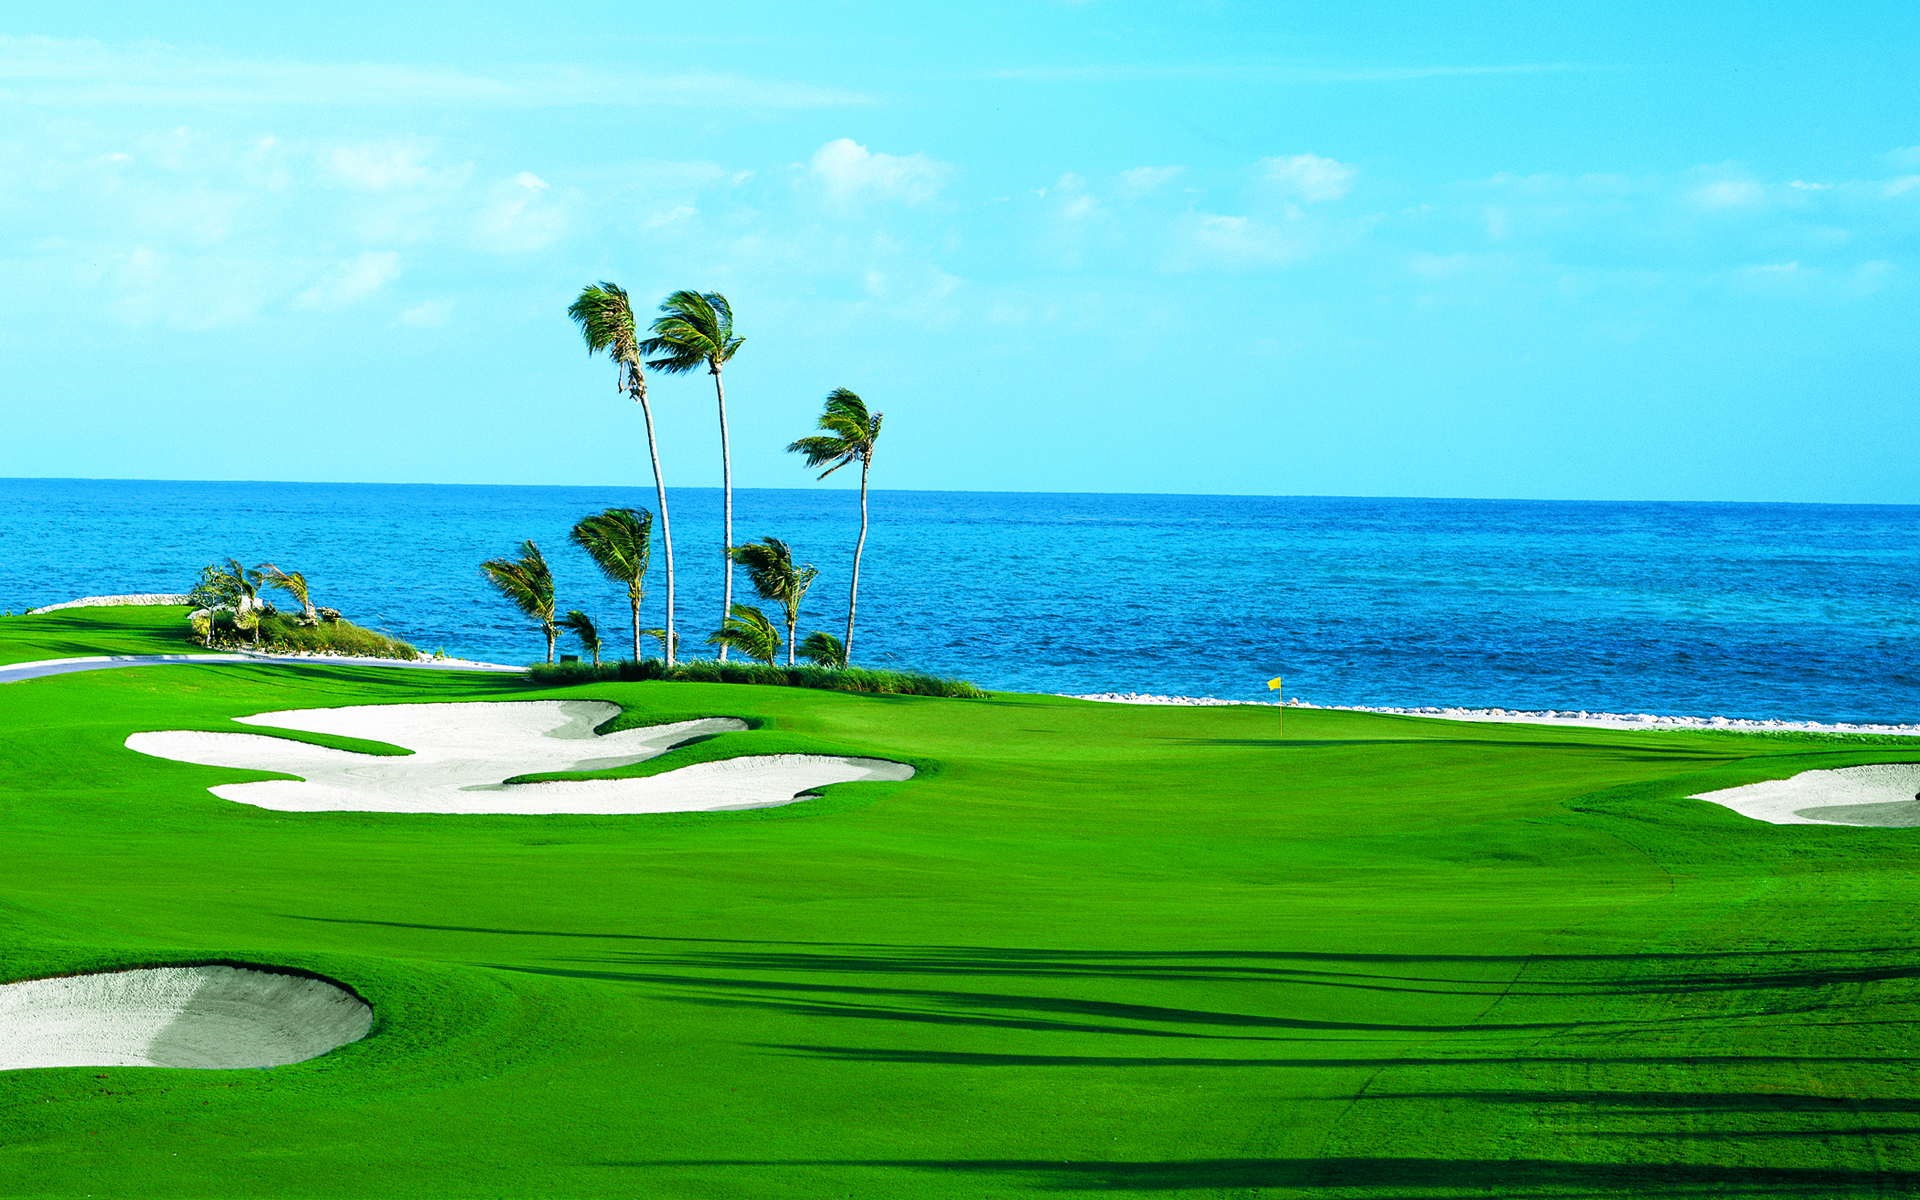 Desktop Backgrounds Golf Courses wallpaper   937393